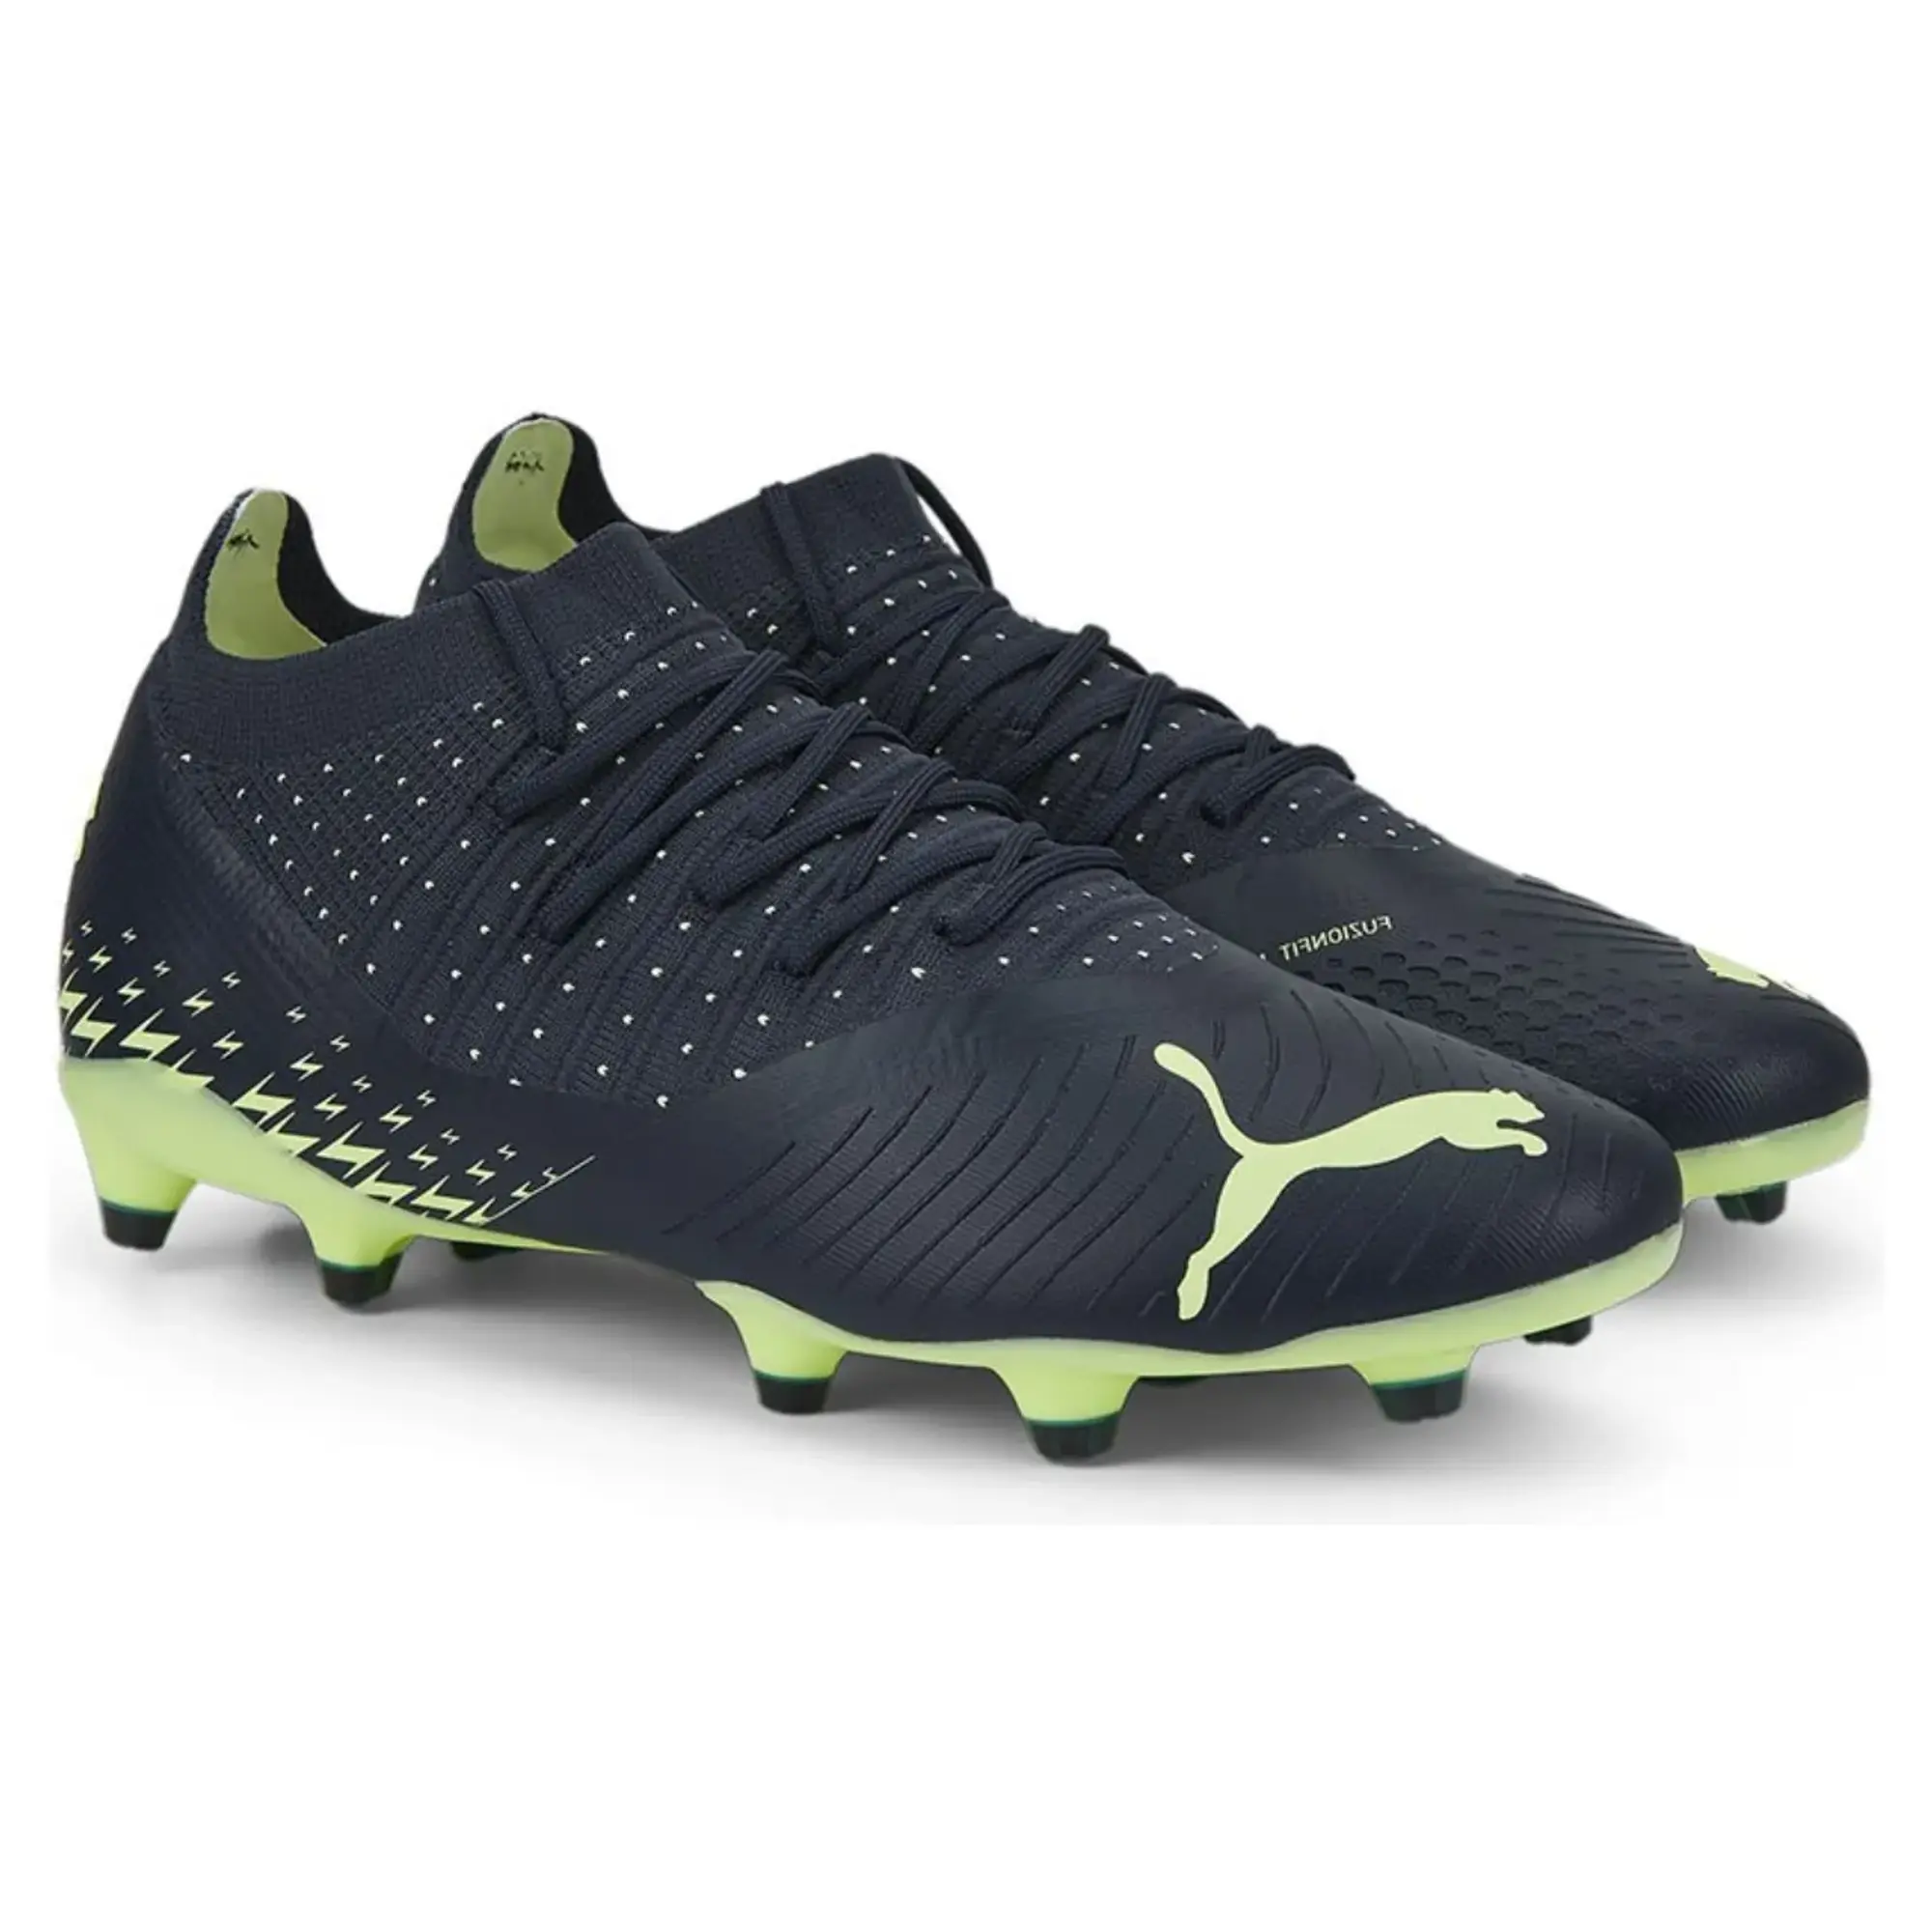 Puma Future Z 3.4 Fg/ag Football Boots  - Black